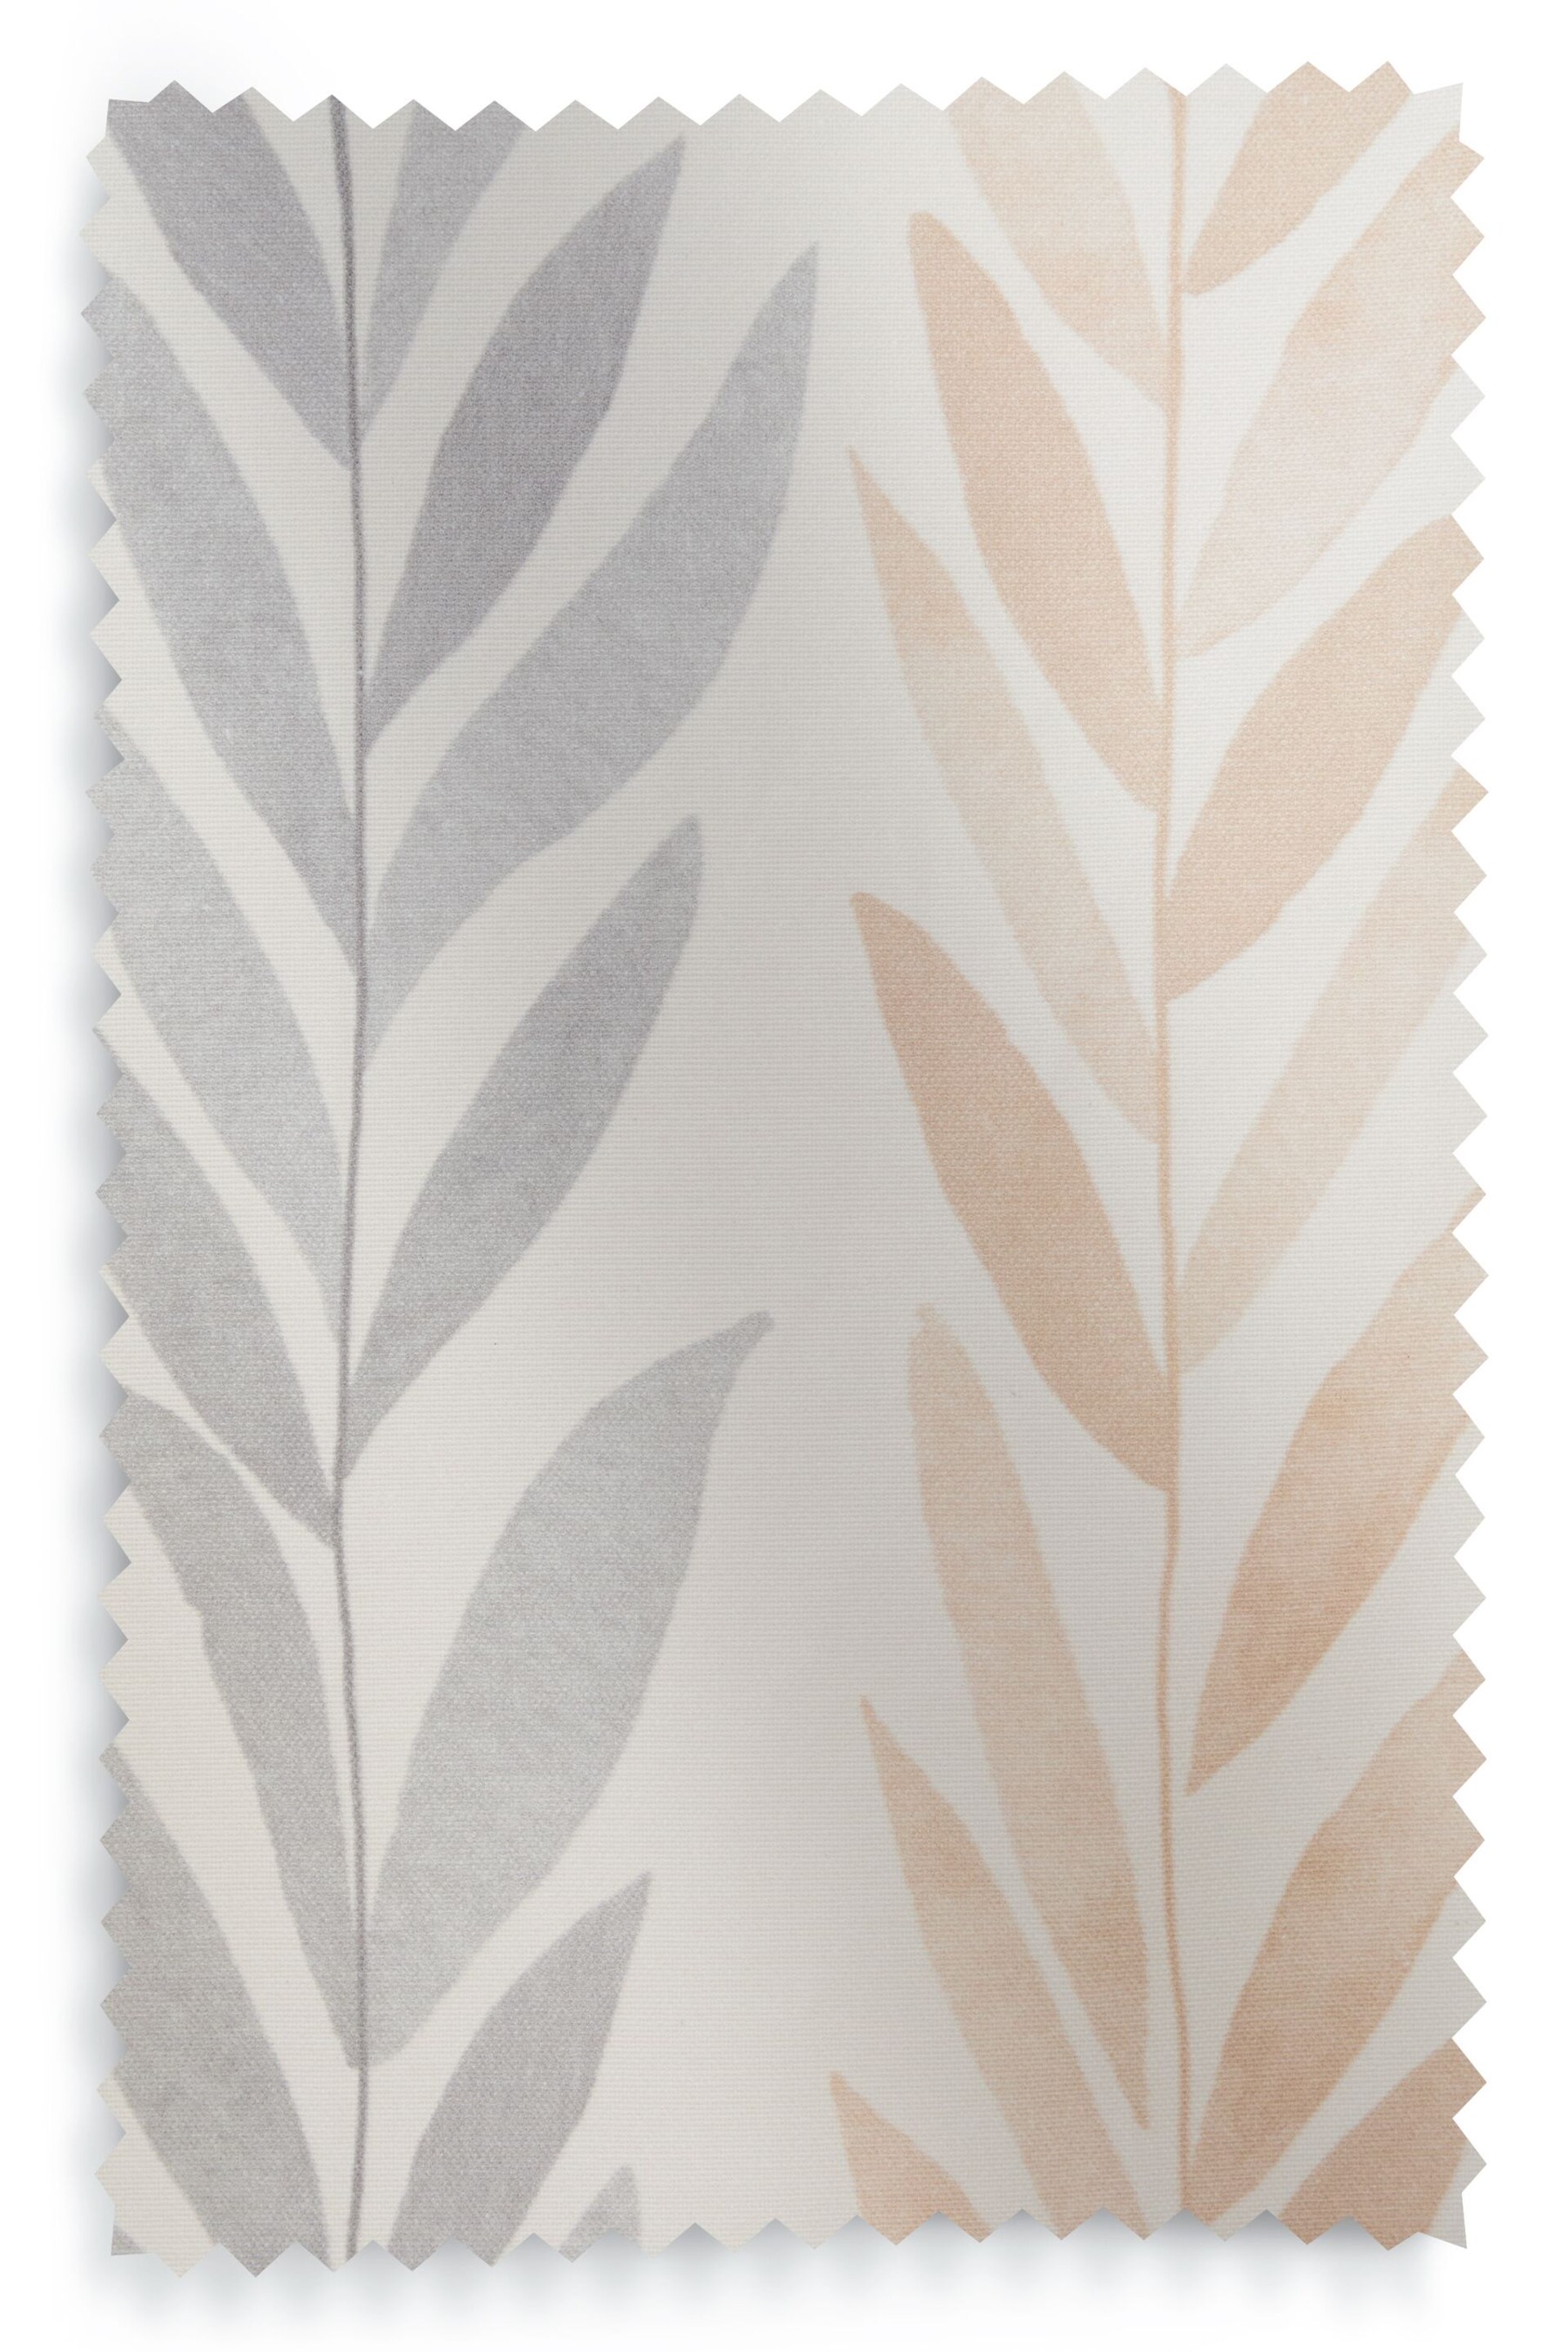 Natural Leaf Stripe Eyelet Lined Curtains - Image 5 of 5